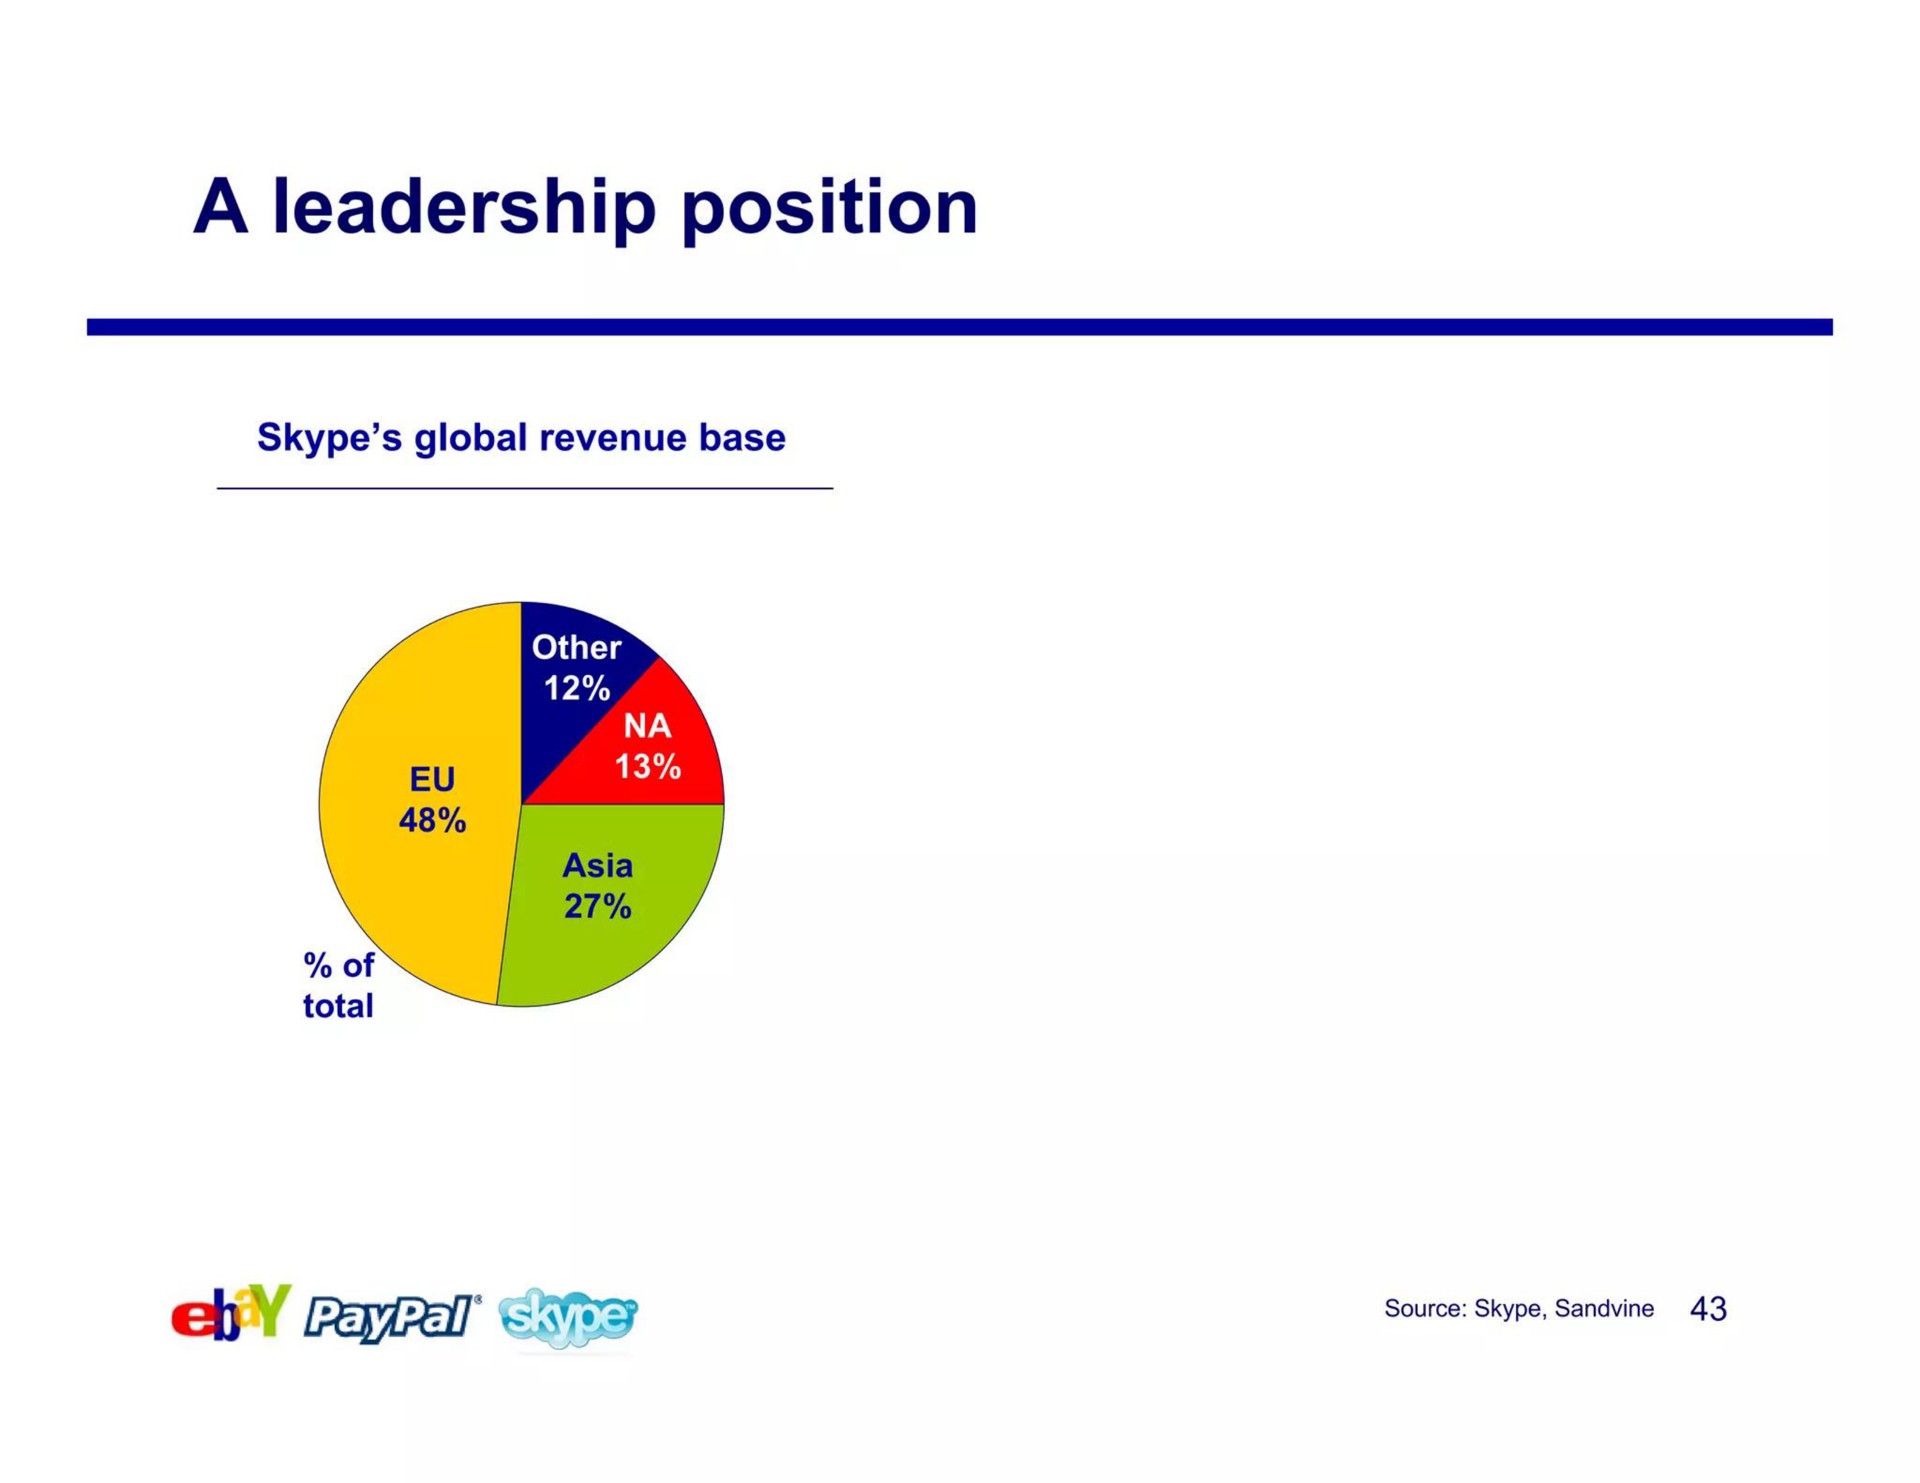 a leadership position | eBay